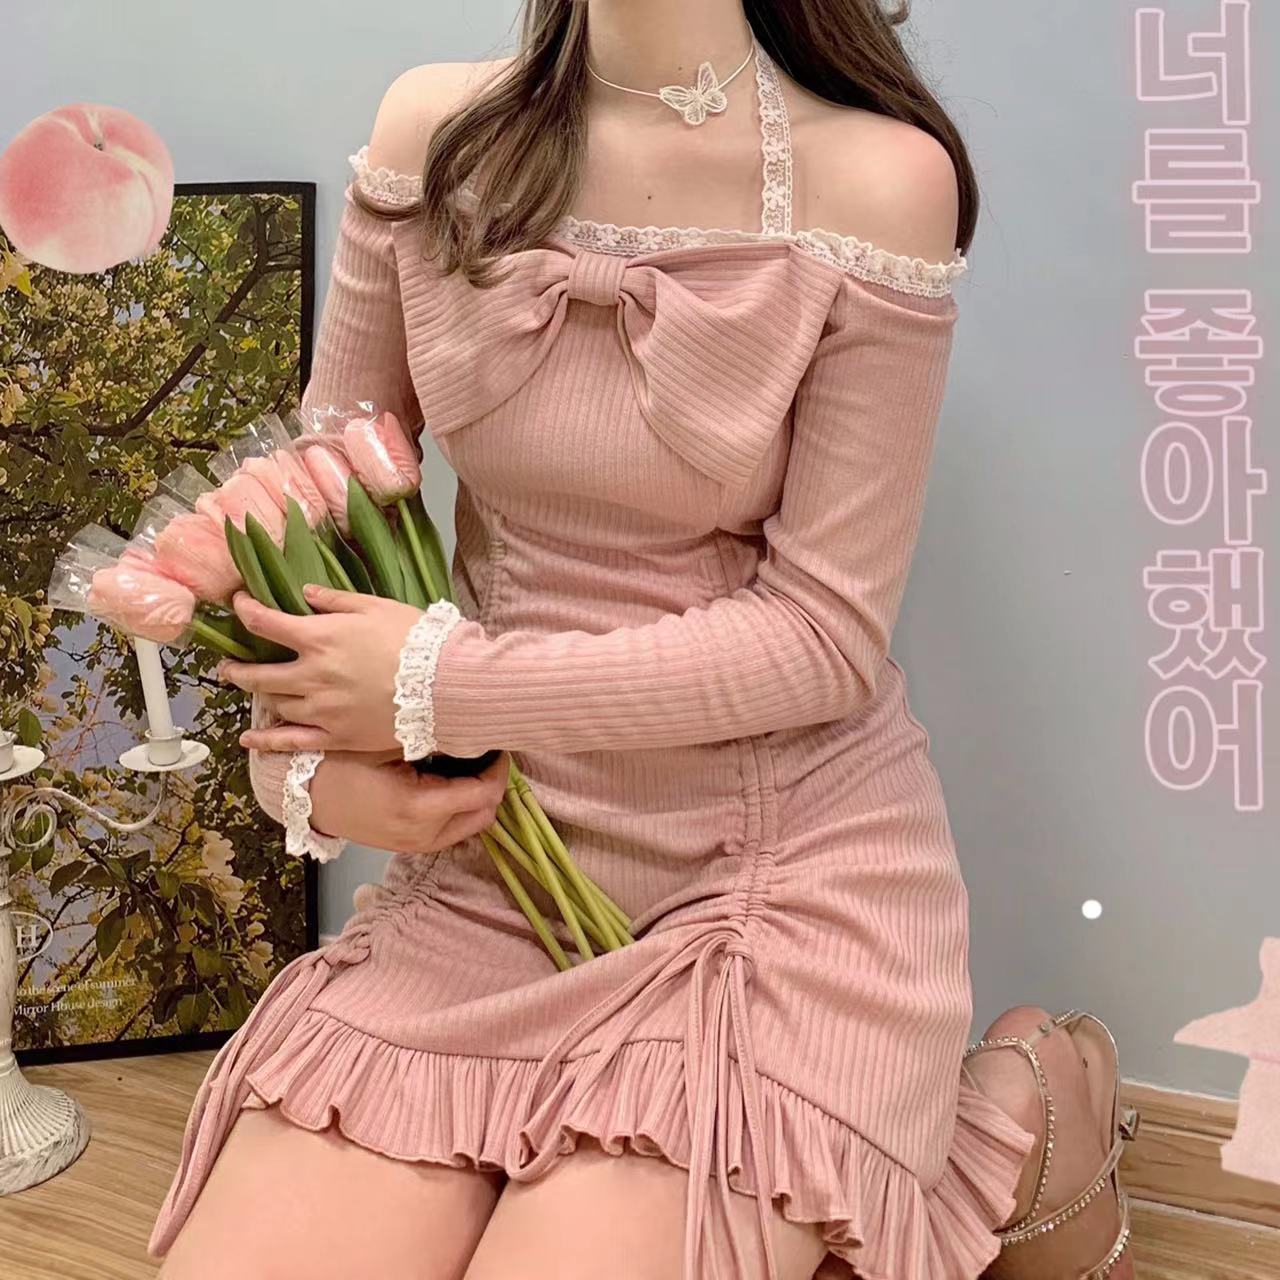 Elegant Korean-inspired Party Mini Dresses - Kaysmar